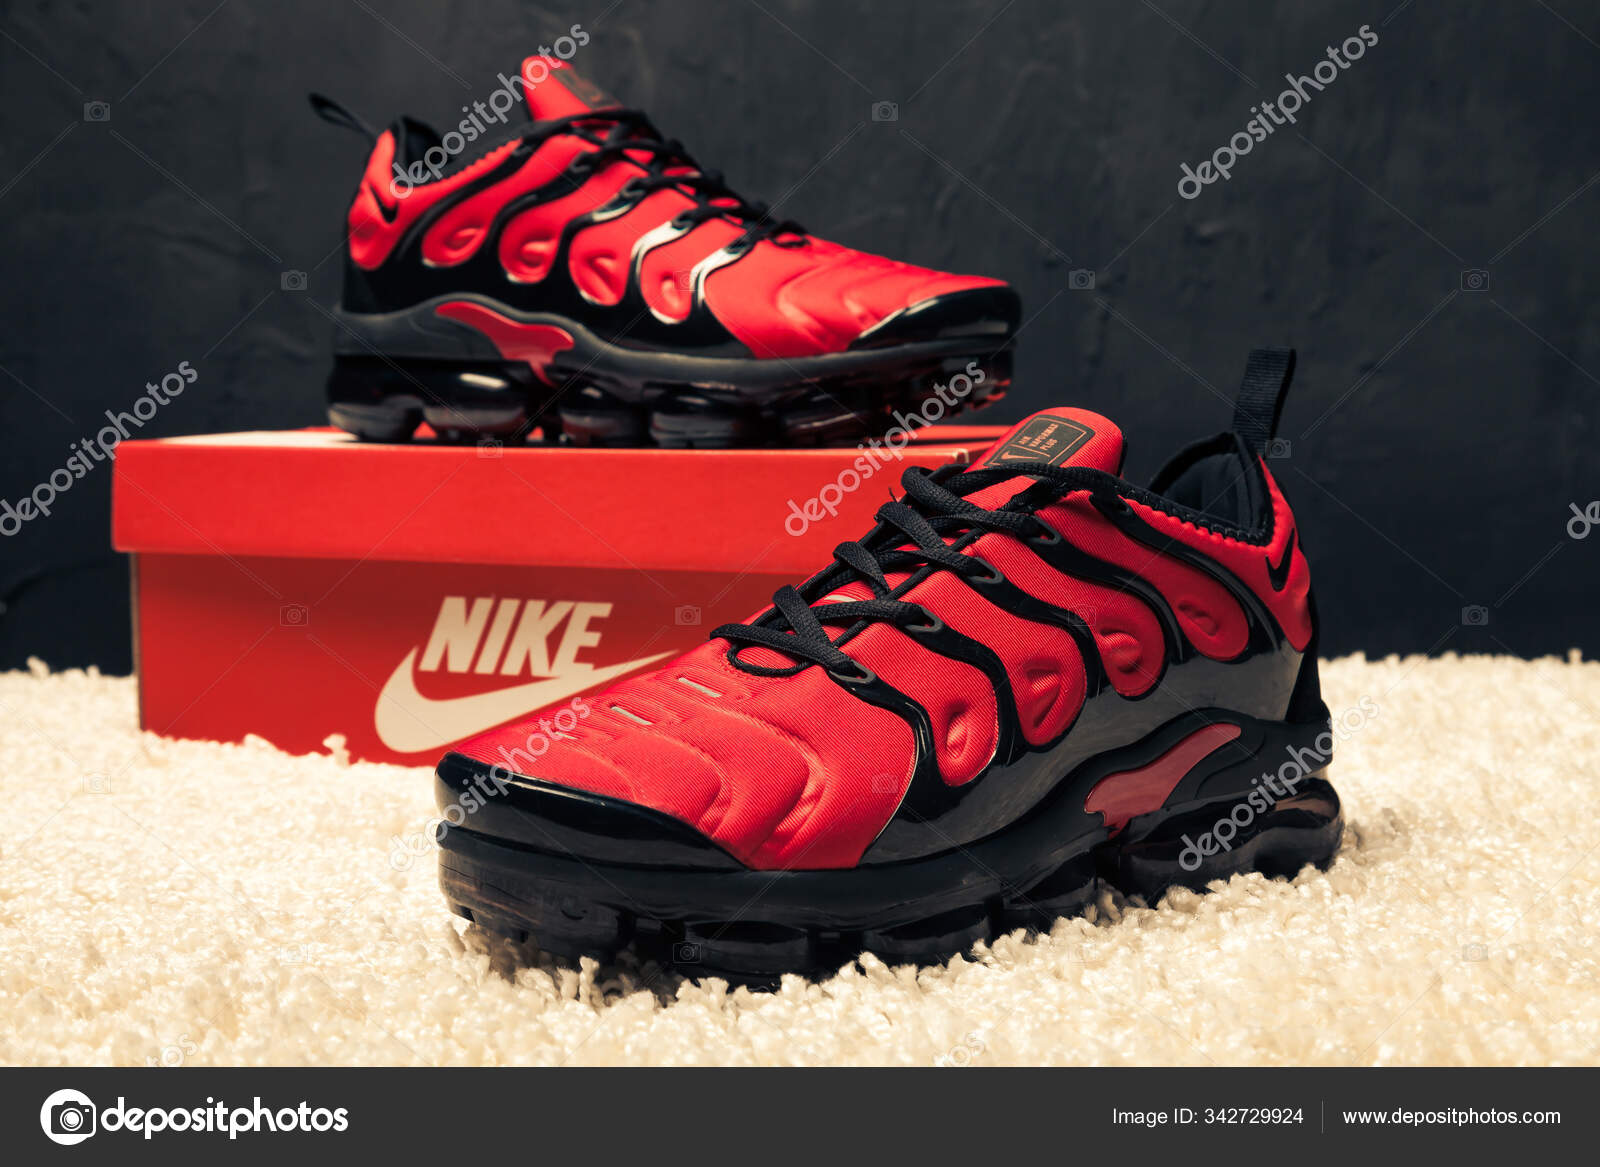 Beautiful Colorful Nice Nike Air Max Running Shoes Sneakers – Stock Editorial Photo © sozon #342729924